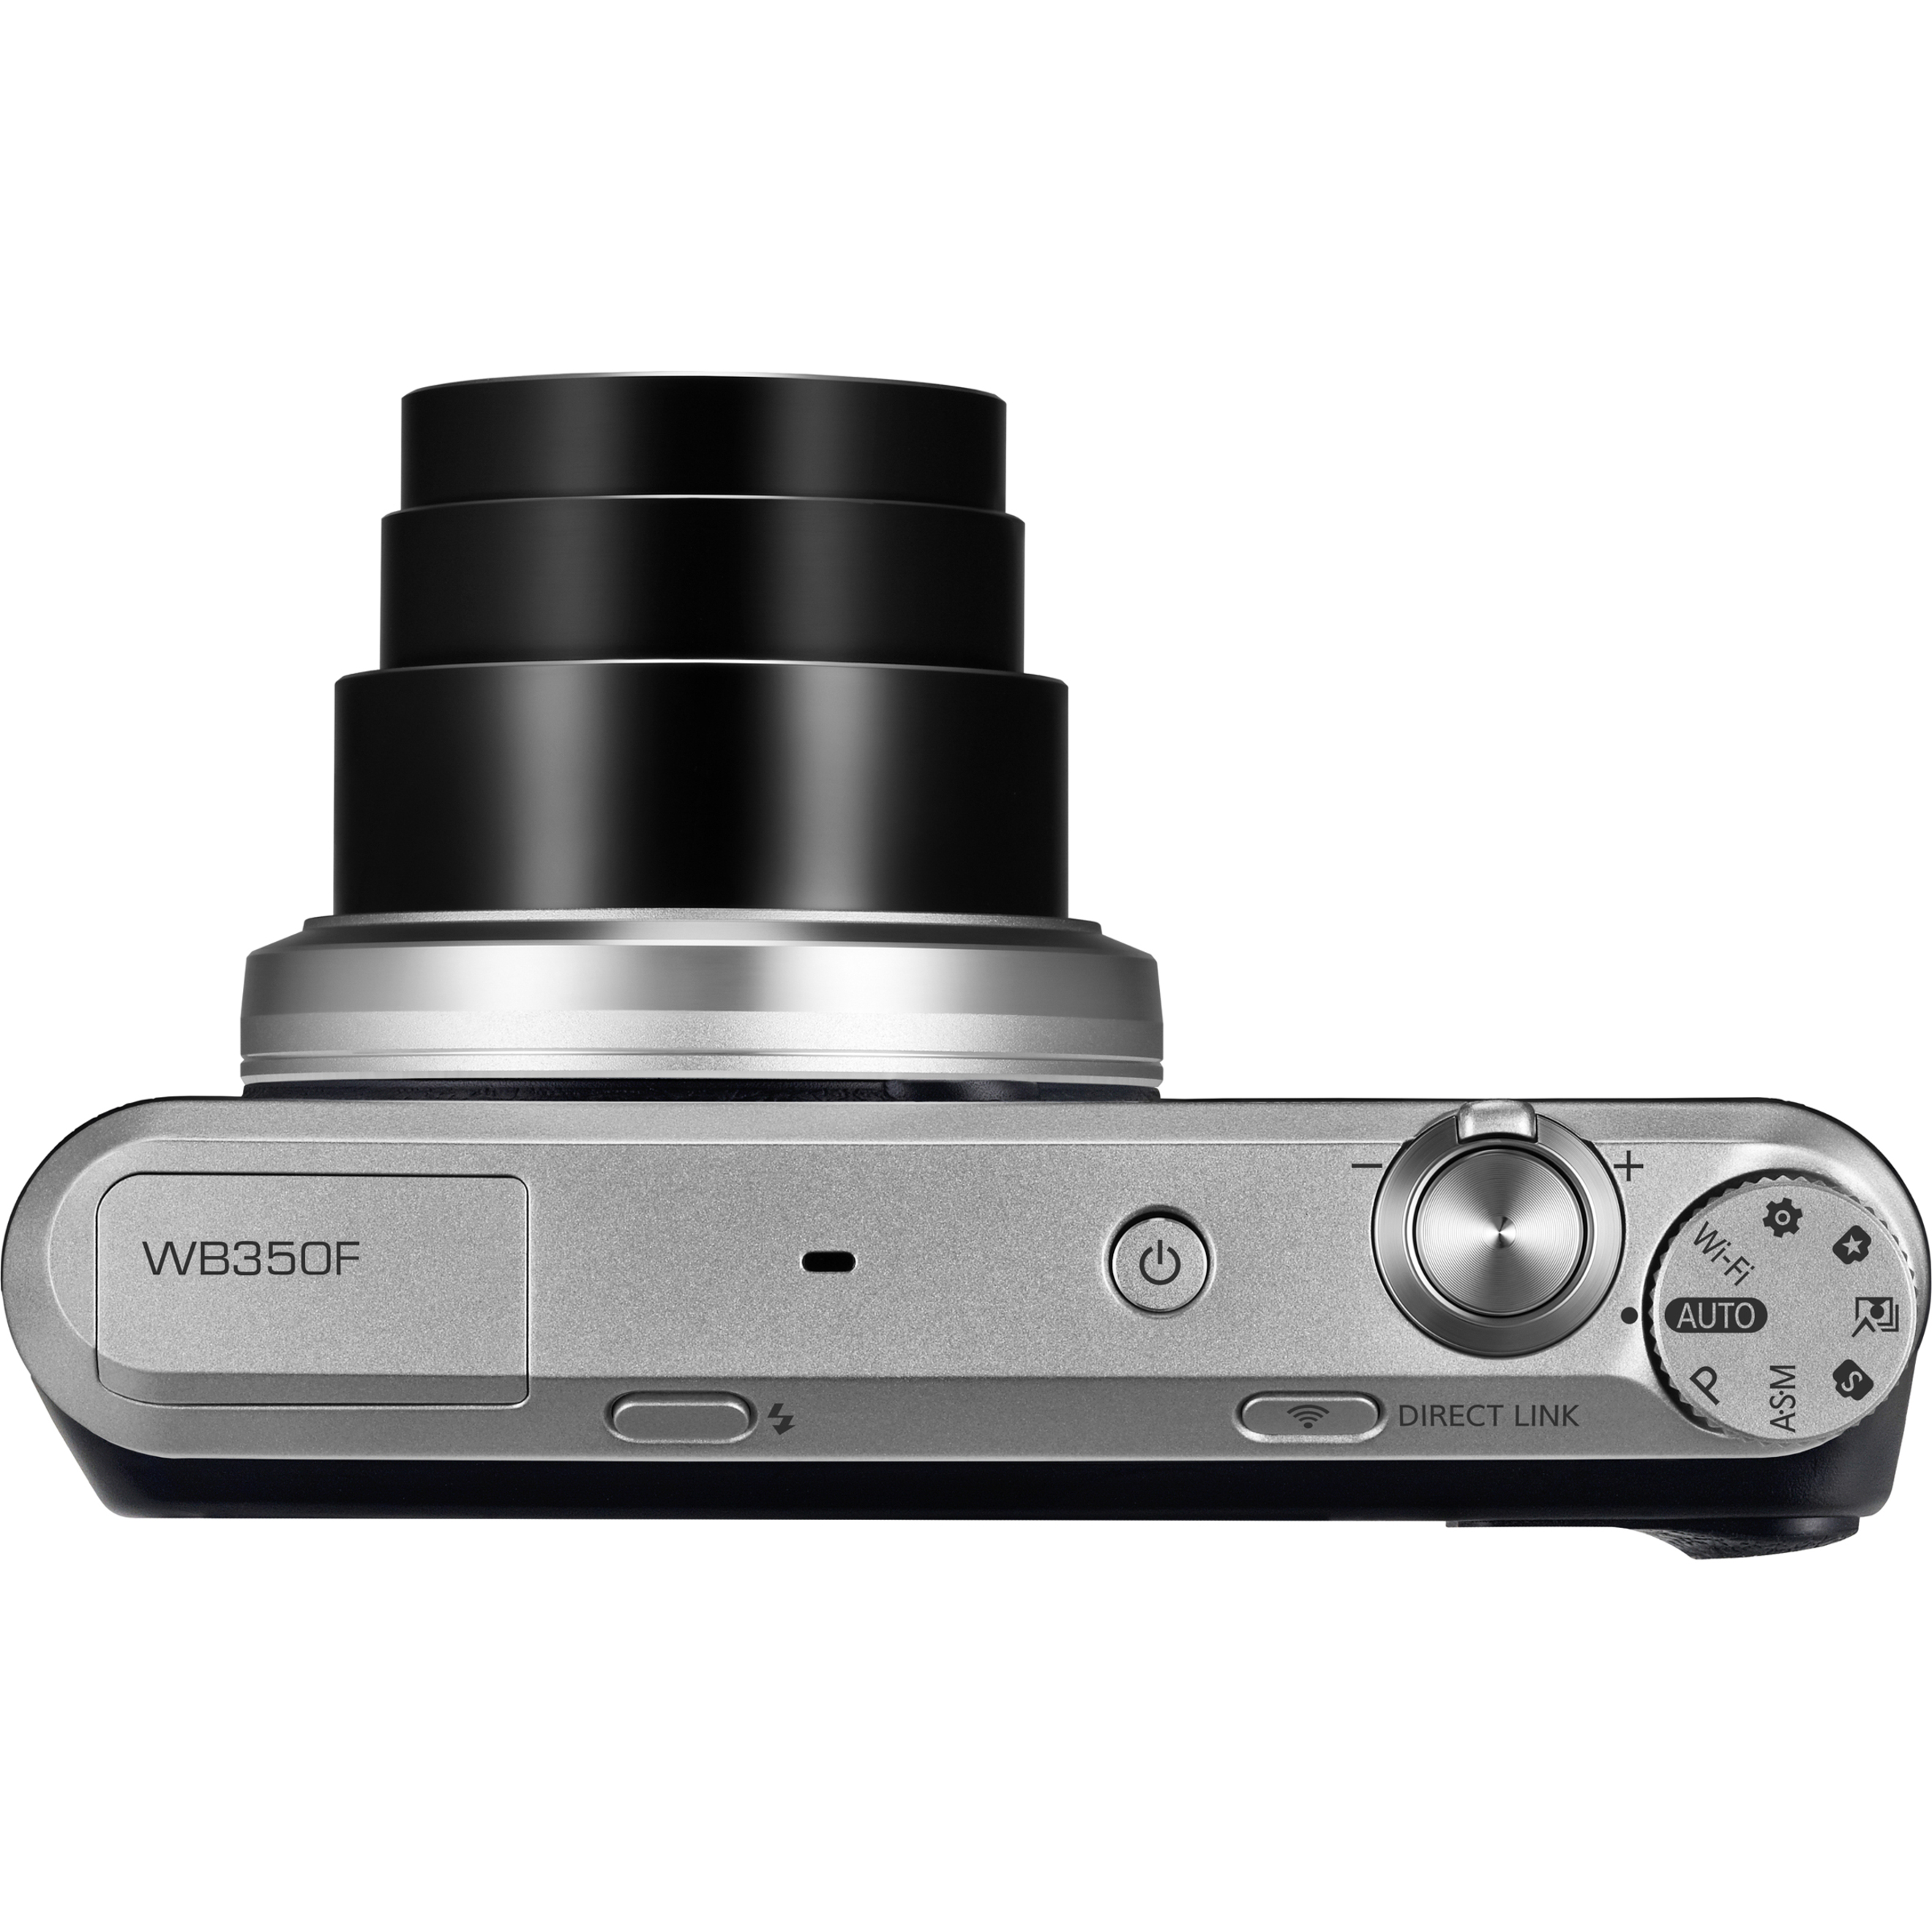 Samsung WB350F 16.3 Megapixel Compact Camera, Black - image 5 of 5